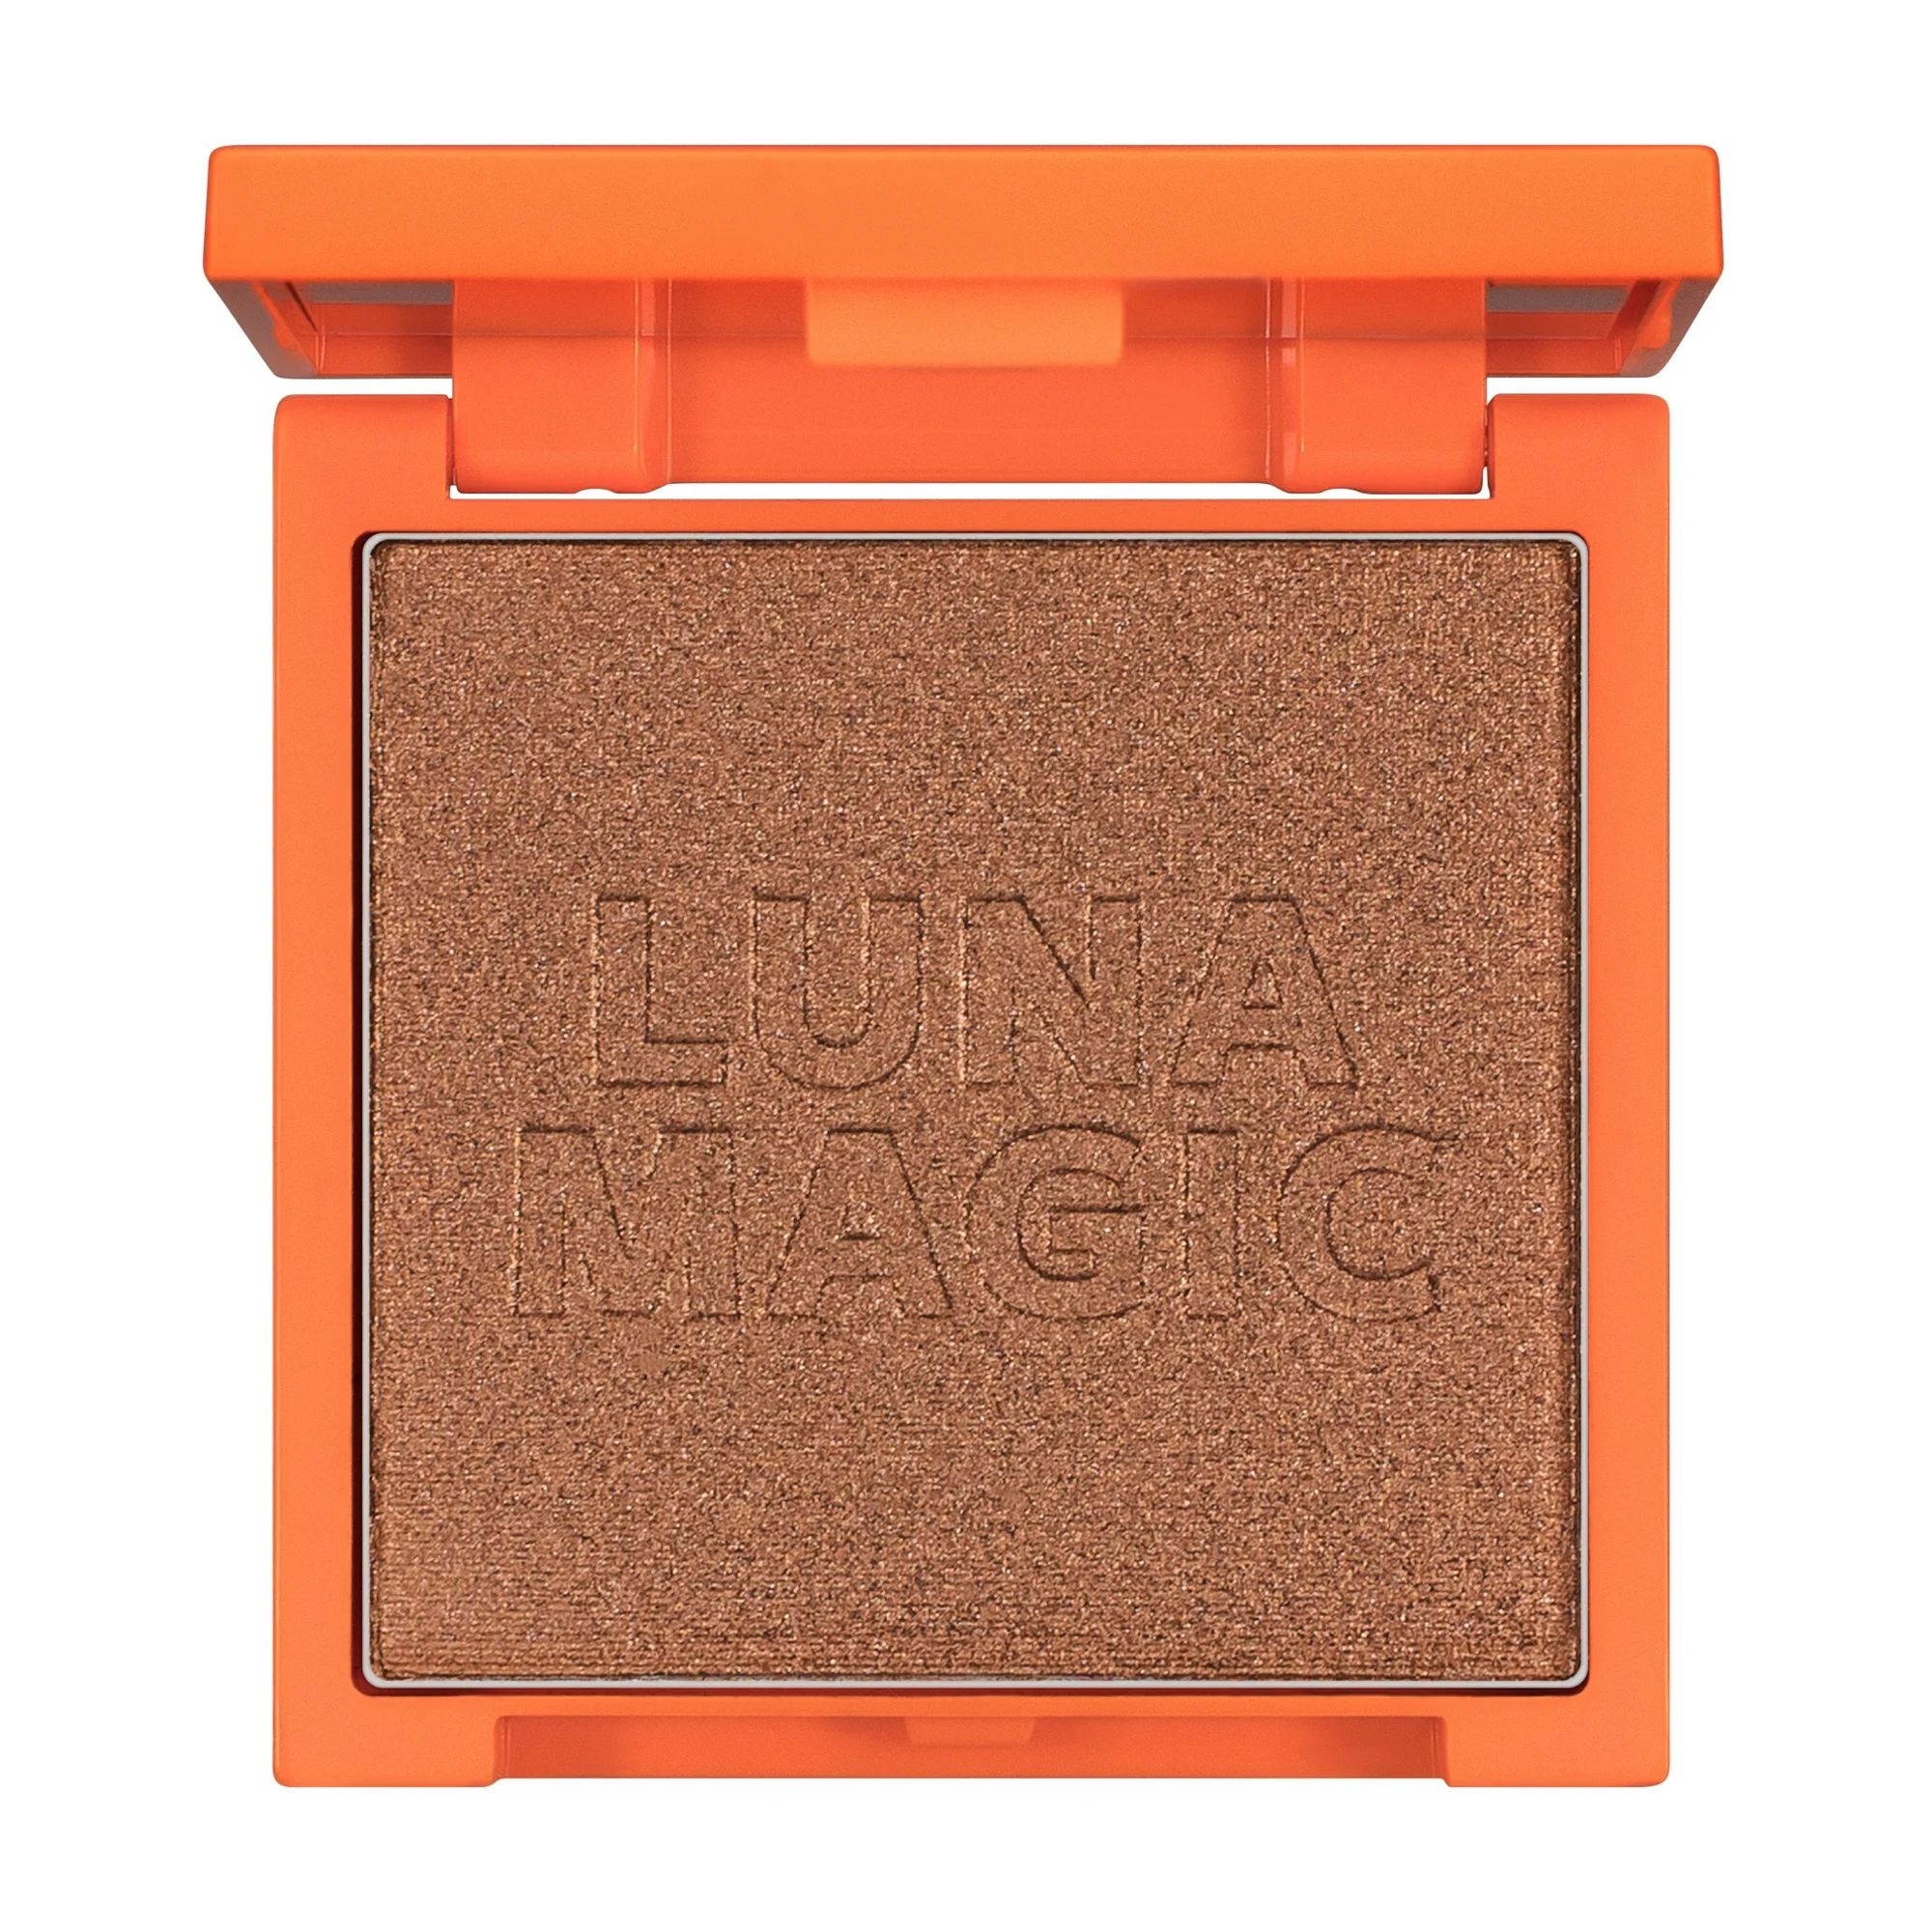 Luna Magic Compact Pressed Highlighter - Caribbean | Walmart (US)